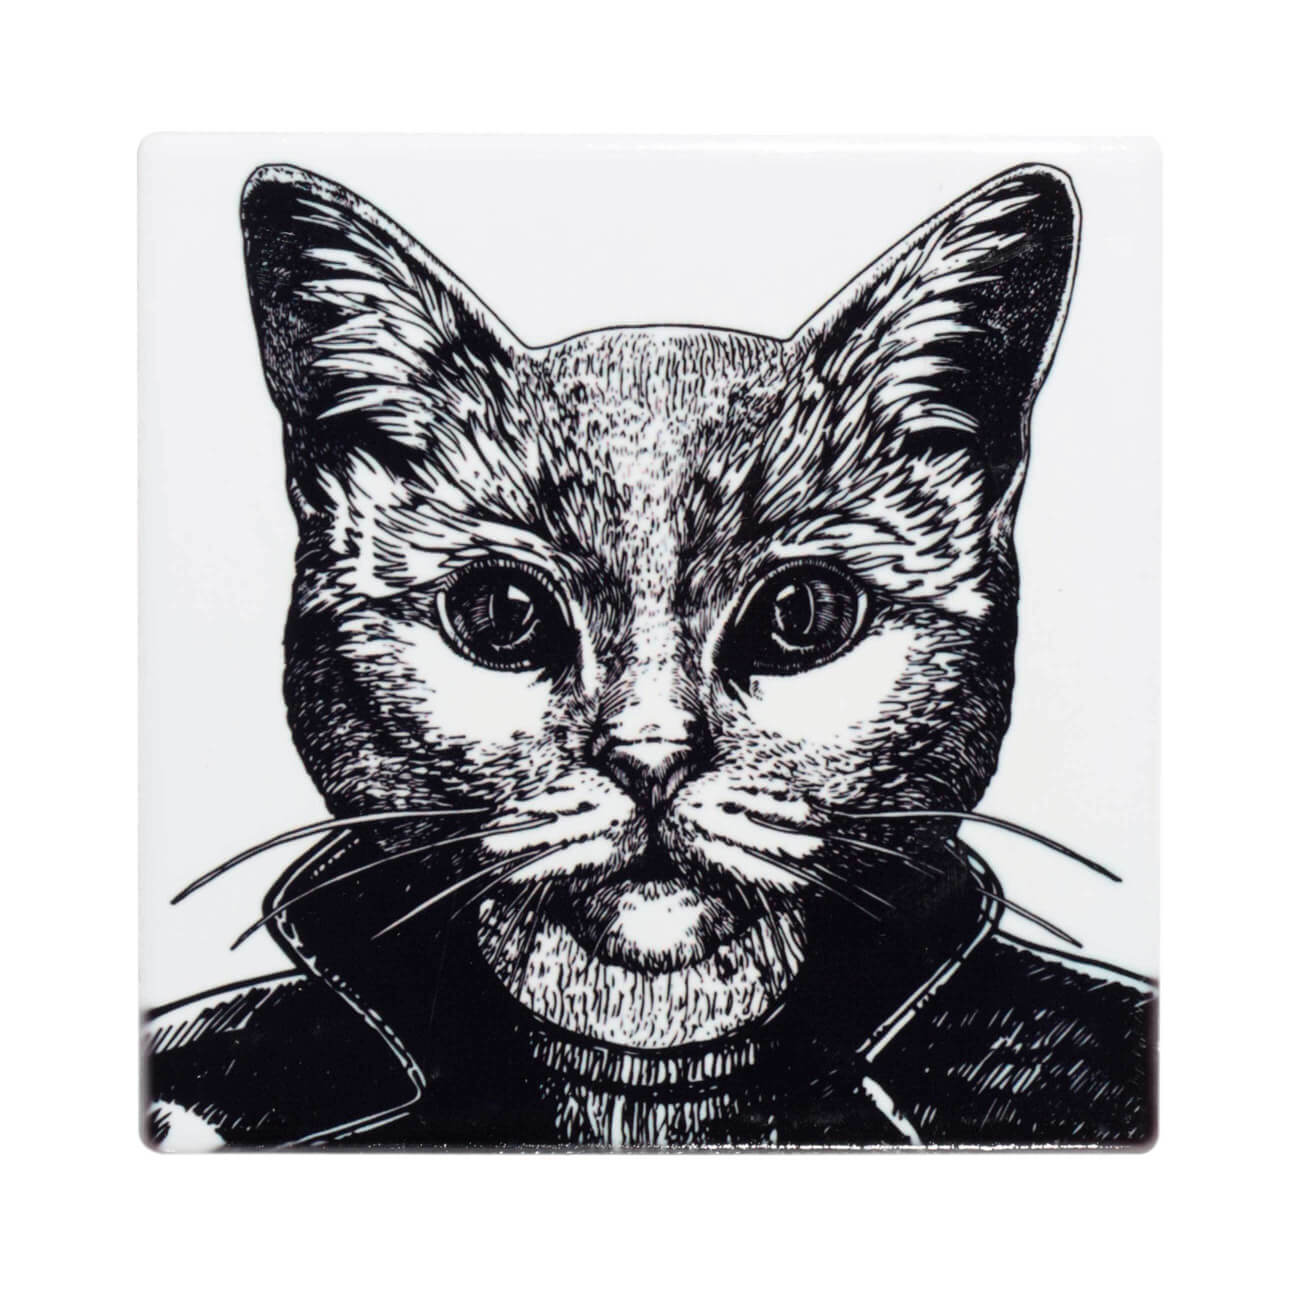 Феникс презент - Декоративная подставка под кружку Питерский кот, 10,8x10,8см арт